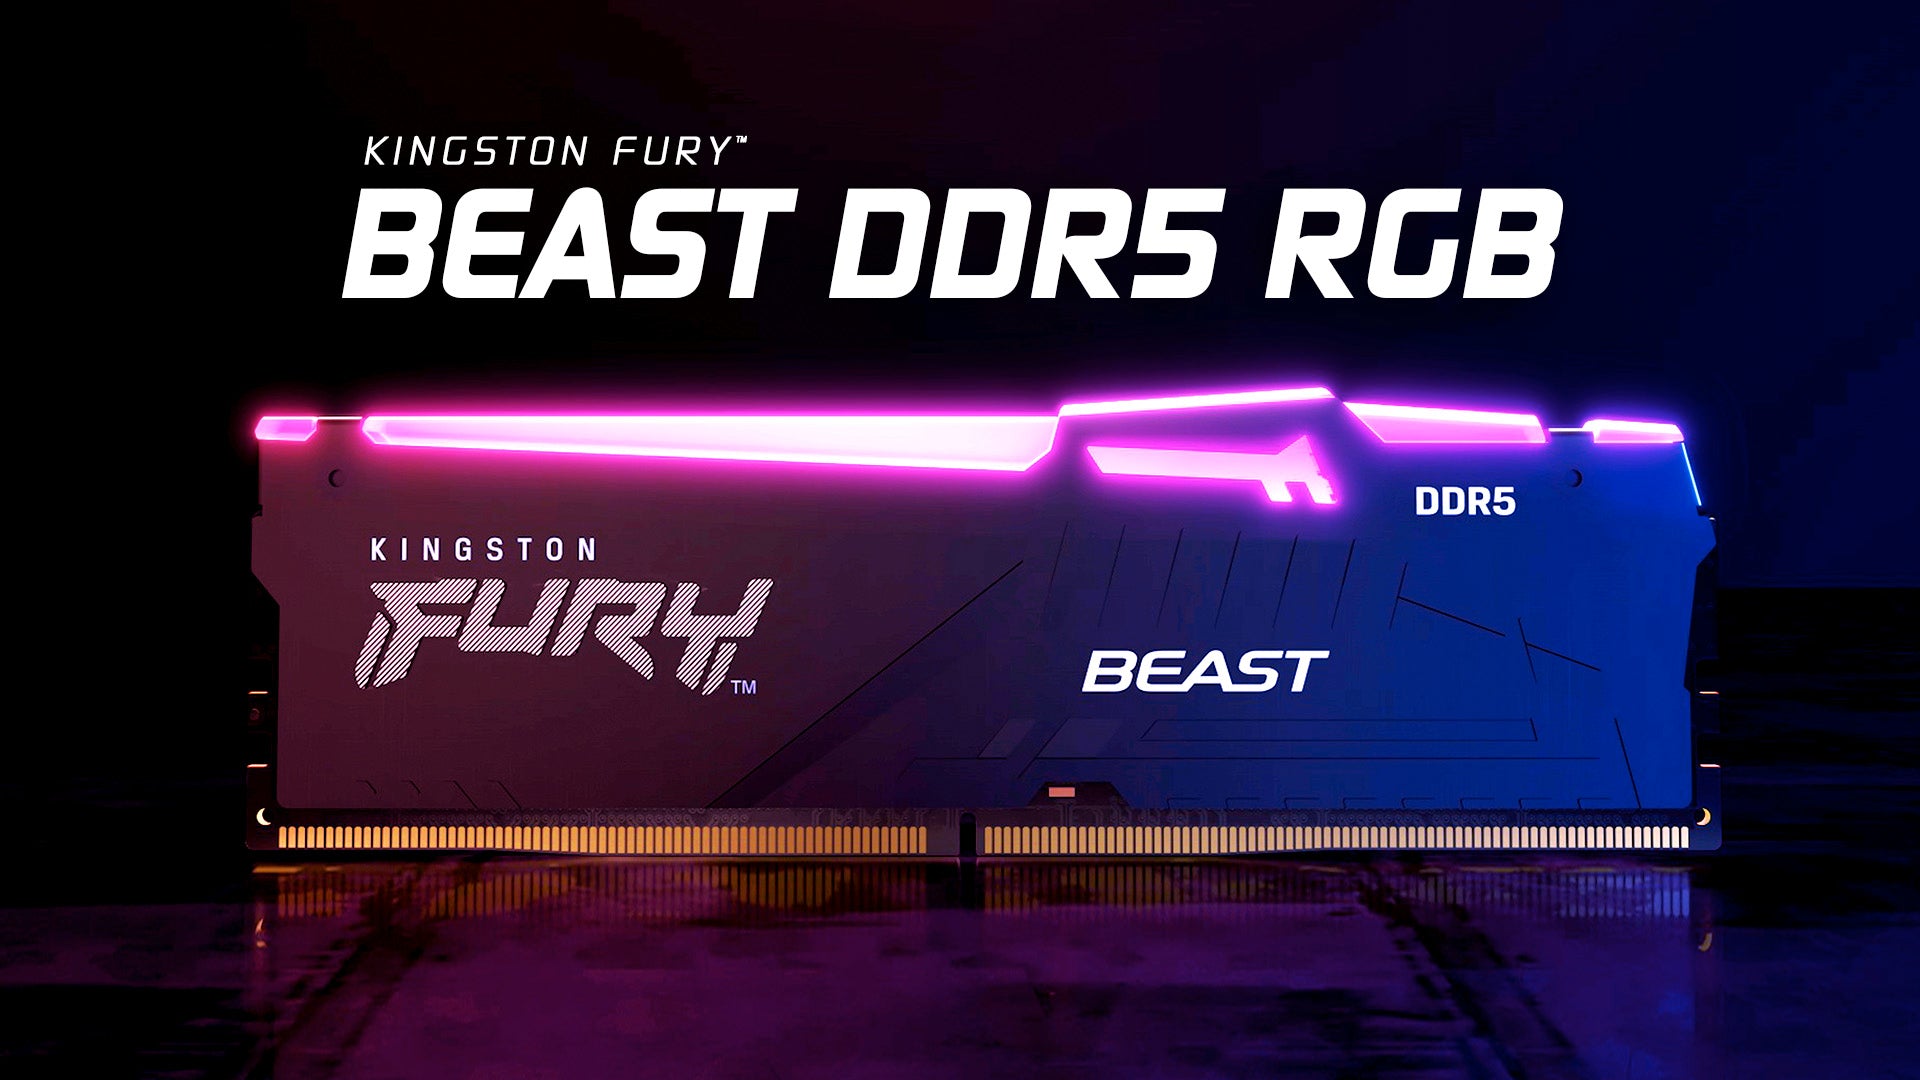 Kingston FURY™ Beast DDR5 RGB XMP Memory | Next-Gen Performance